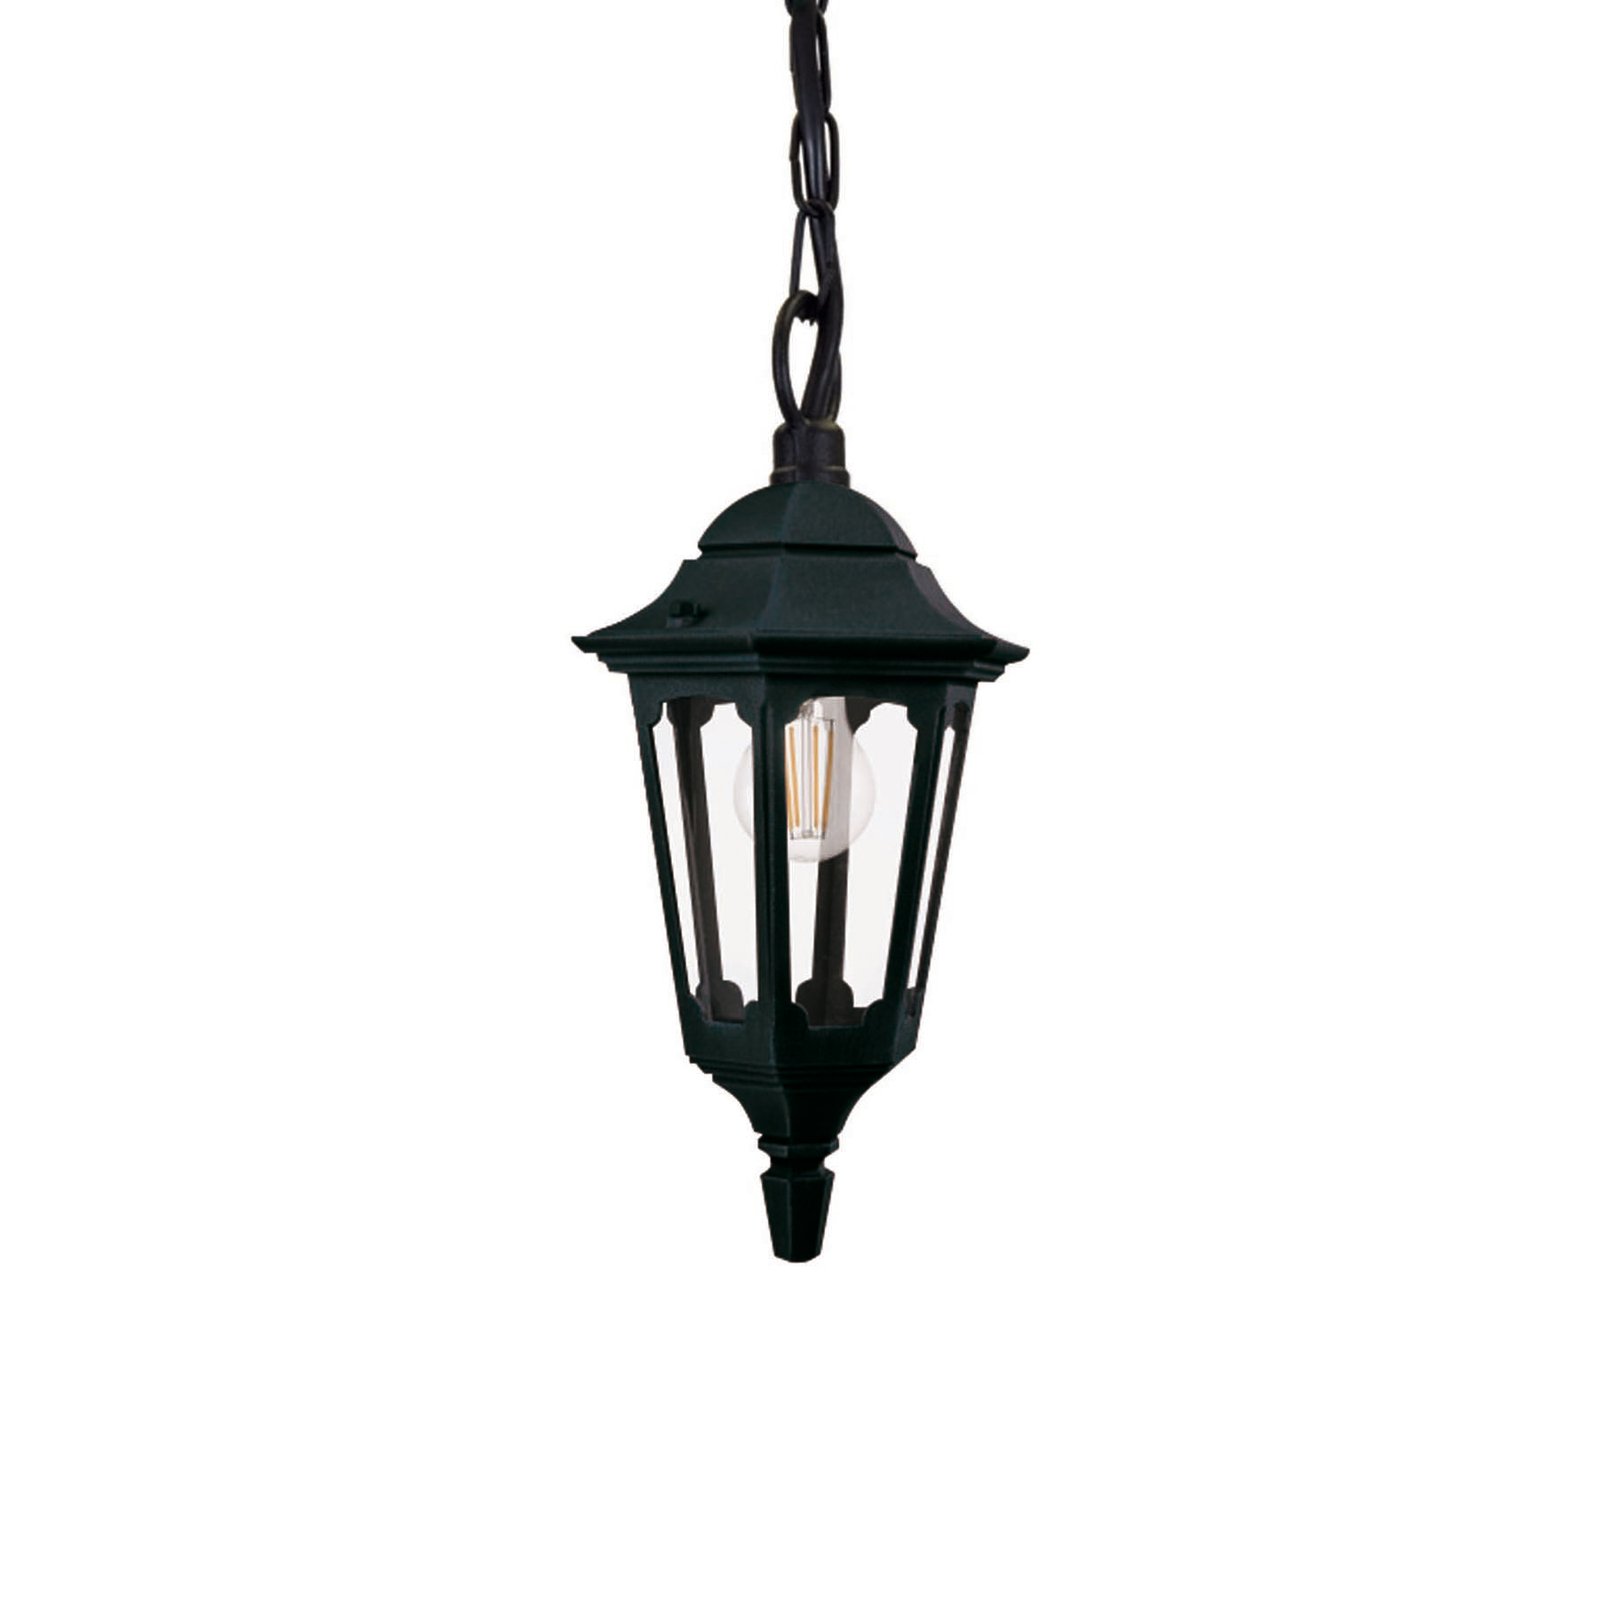 Parish Mini hanglamp met kettingophanging, hoogte 34,5 cm